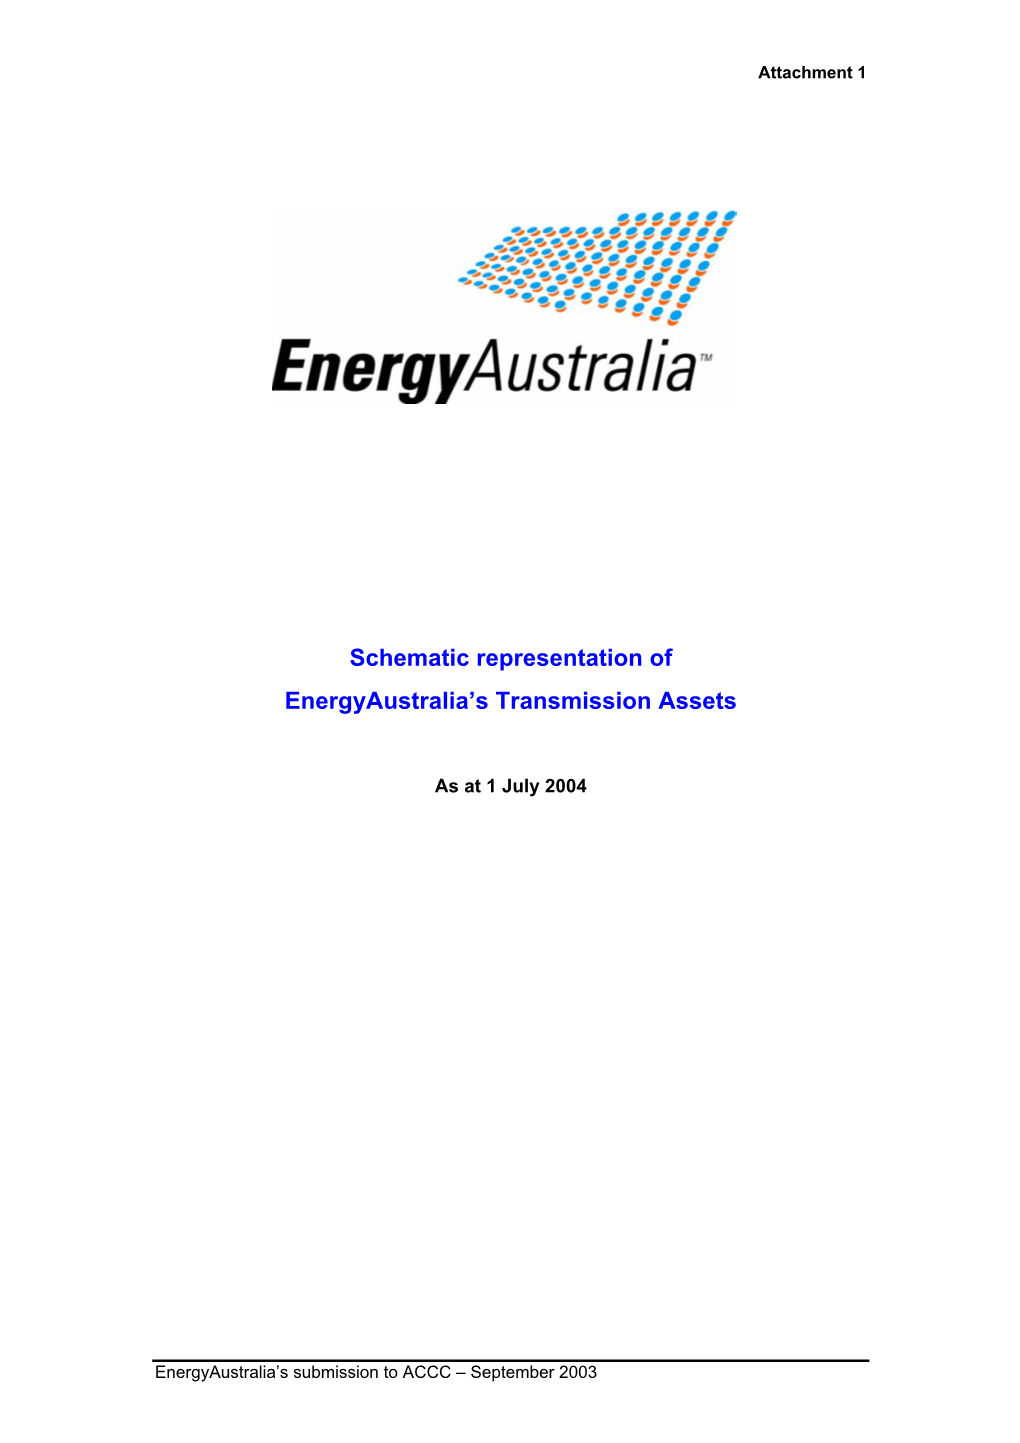 Schematic Representation of Energyaustralia's Transmission